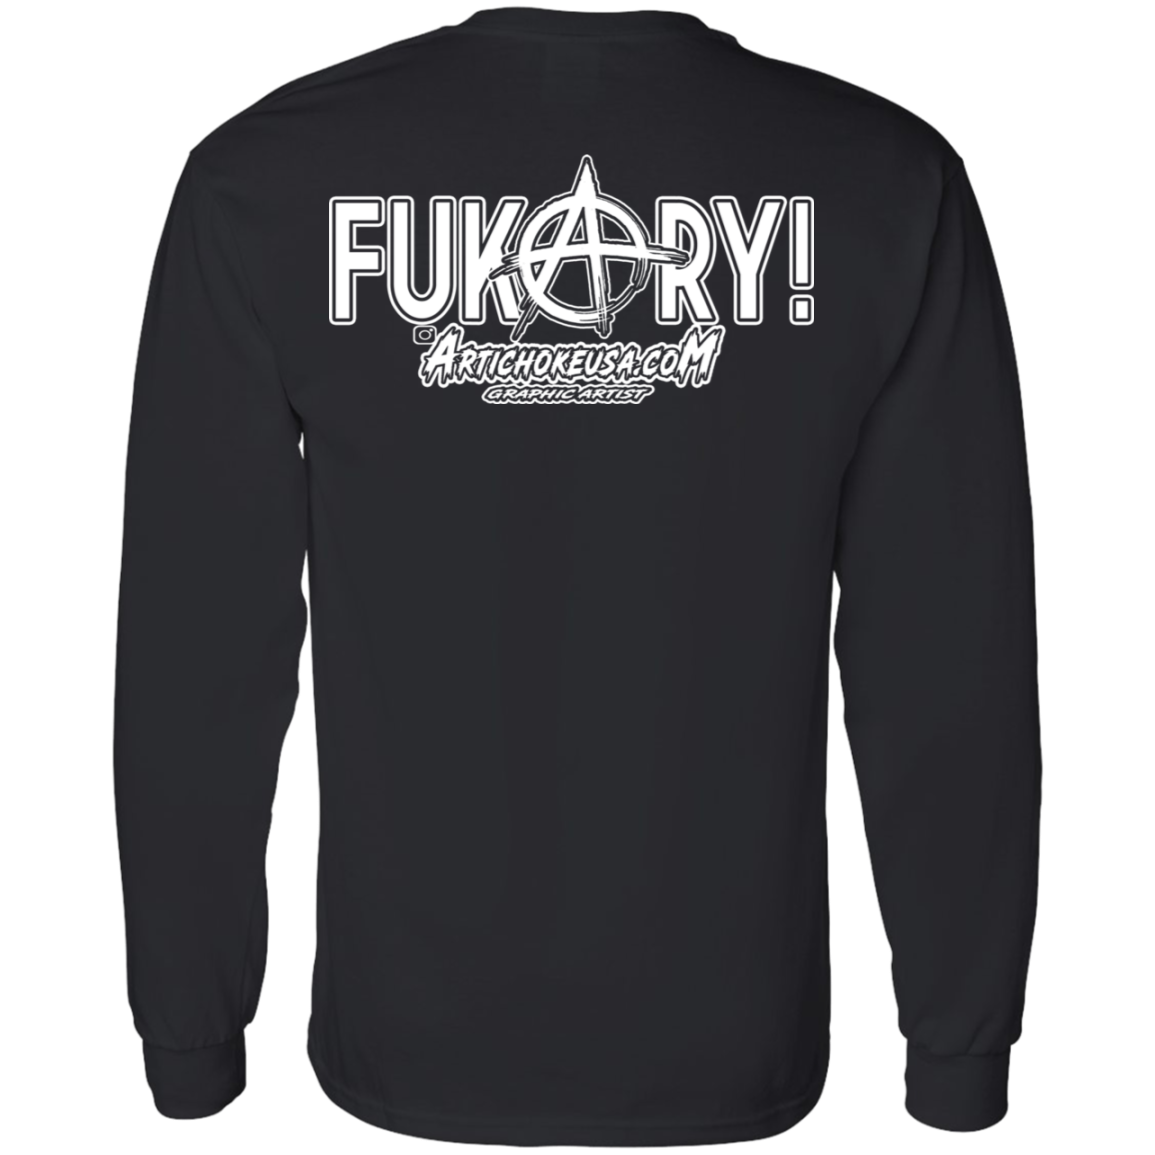 ArtichokeUSA Custom Design. FUKCERY. The New Bullshit. LS T-Shirt 5.3 oz.